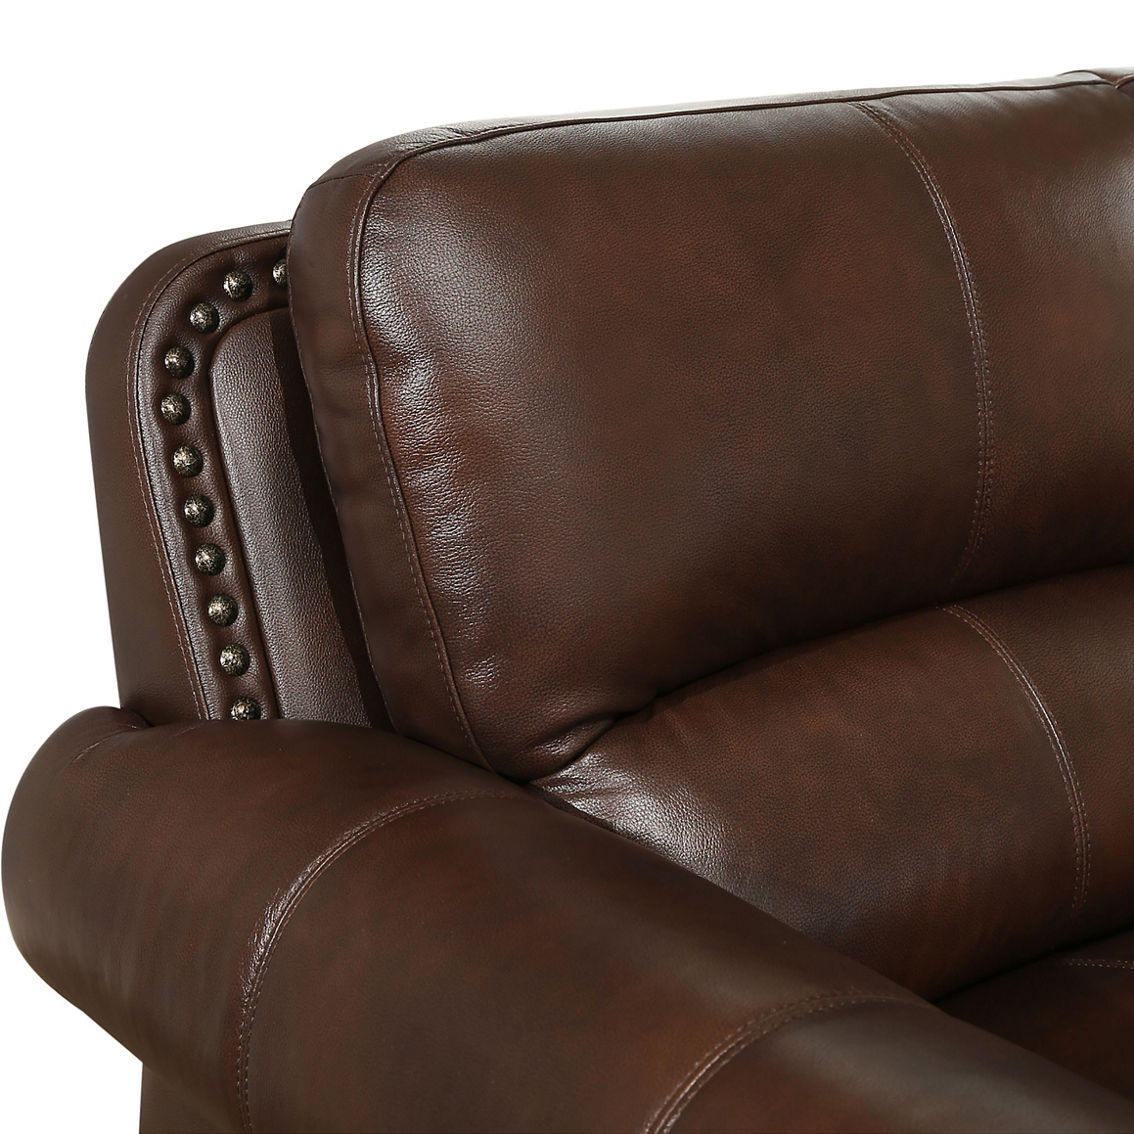 Abbyson Austin Leather Armchair - Image 5 of 5